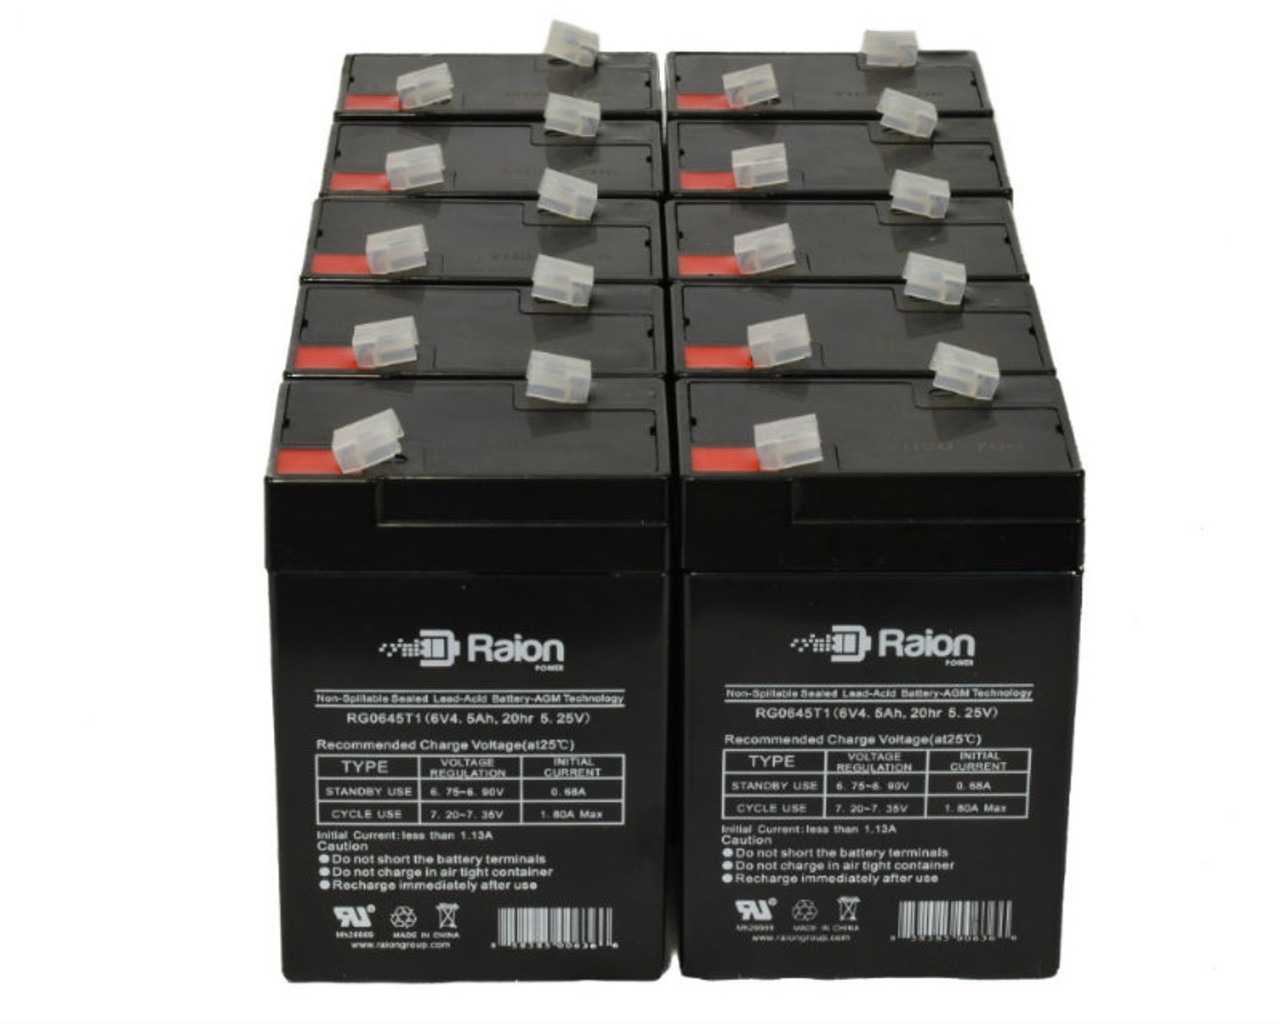 Raion Power 6V 4.5Ah Replacement Emergency Light Battery for Sonnenschein M126 - 10 Pack